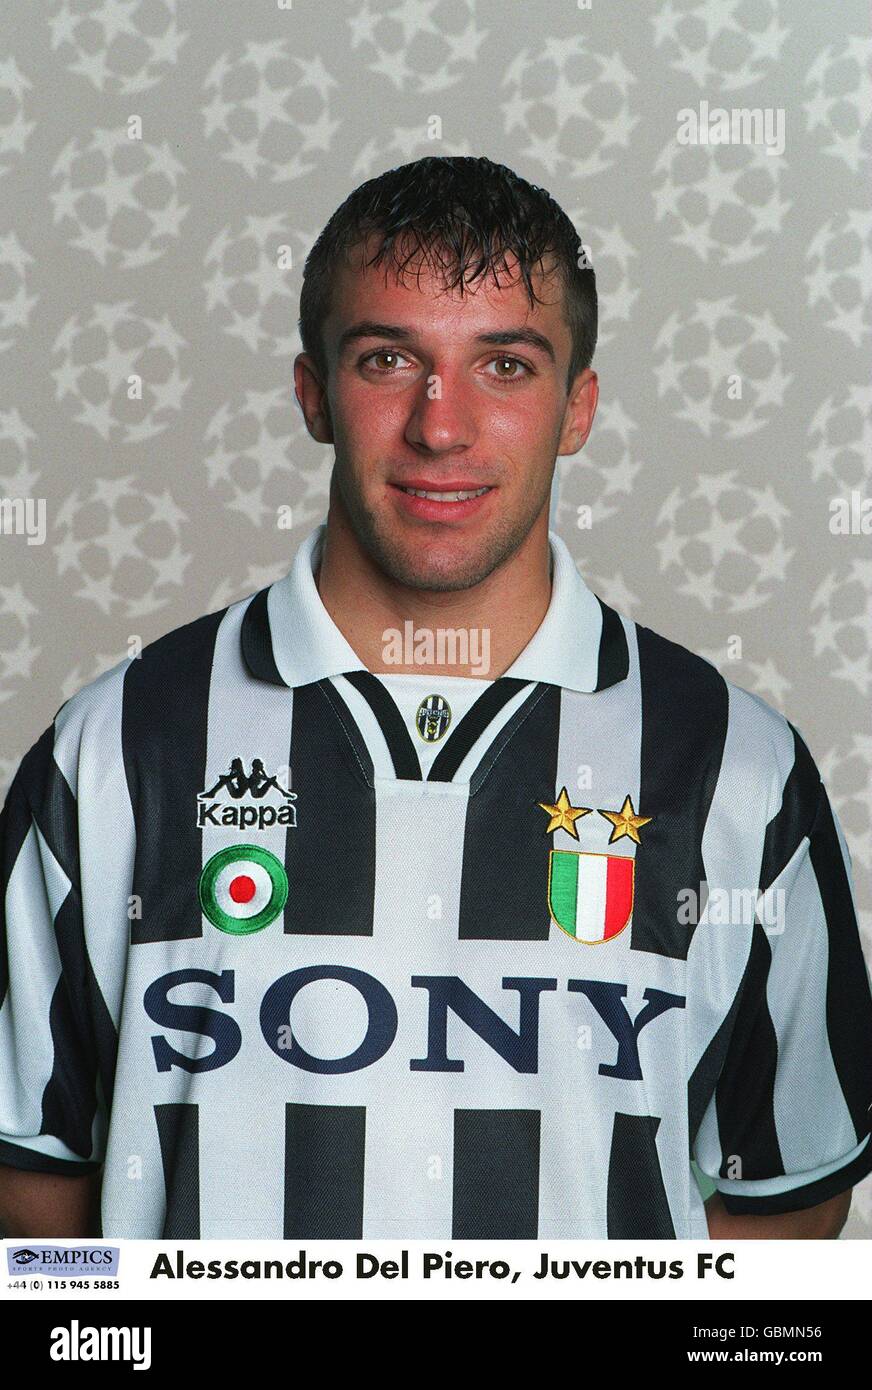 UEFA Champions League 1995/96 .... Alessandro del Piero, Juventus FC Foto Stock